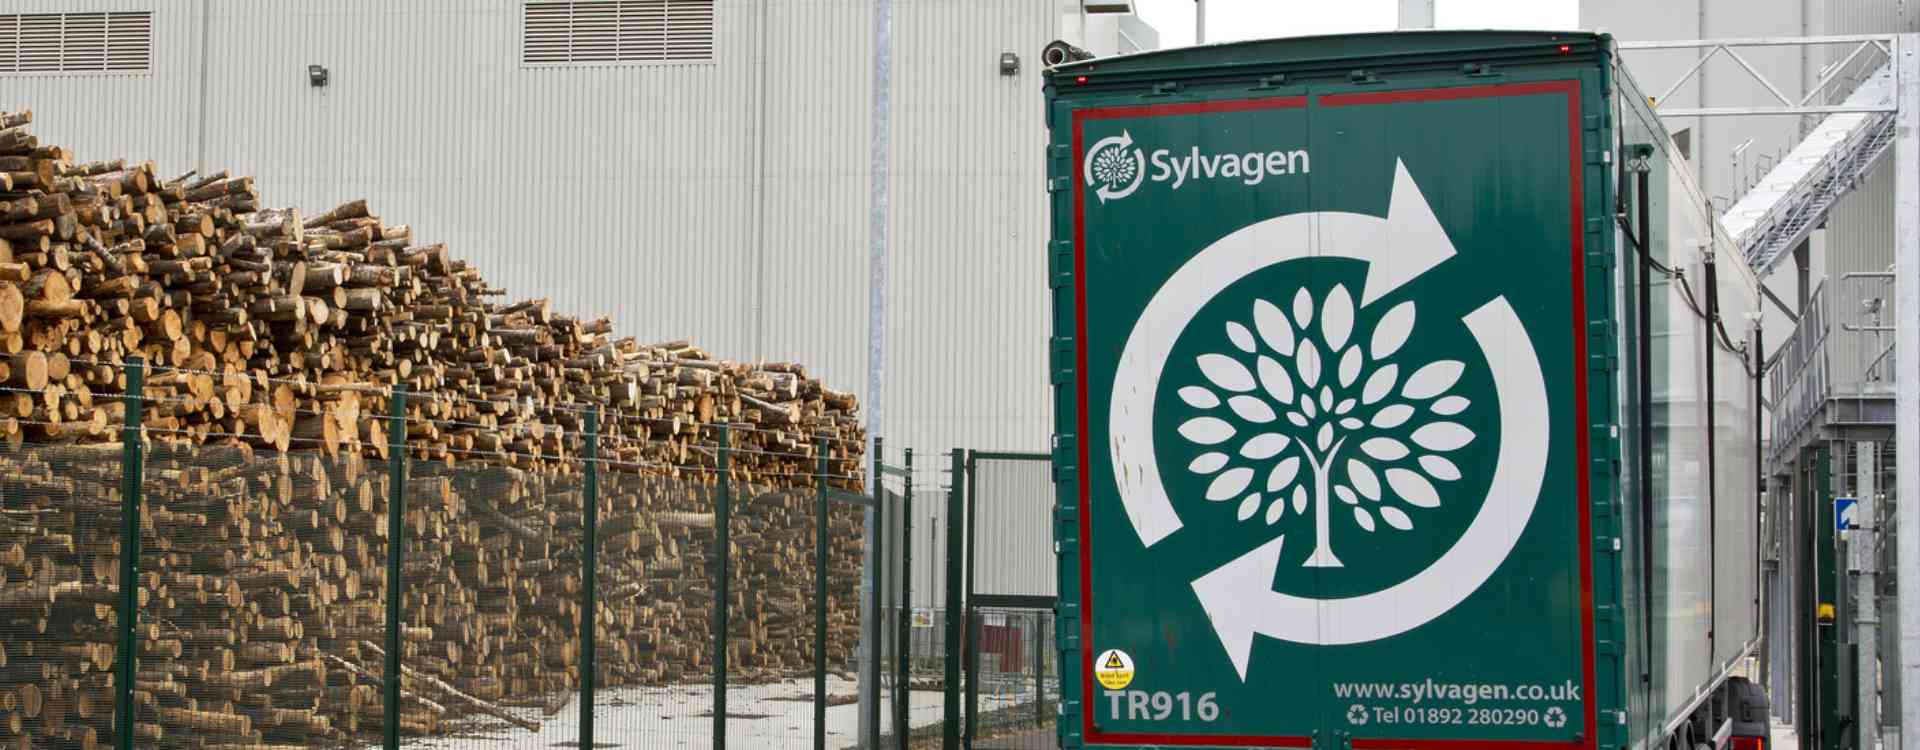 Sylvagen walking floor delivering into power station